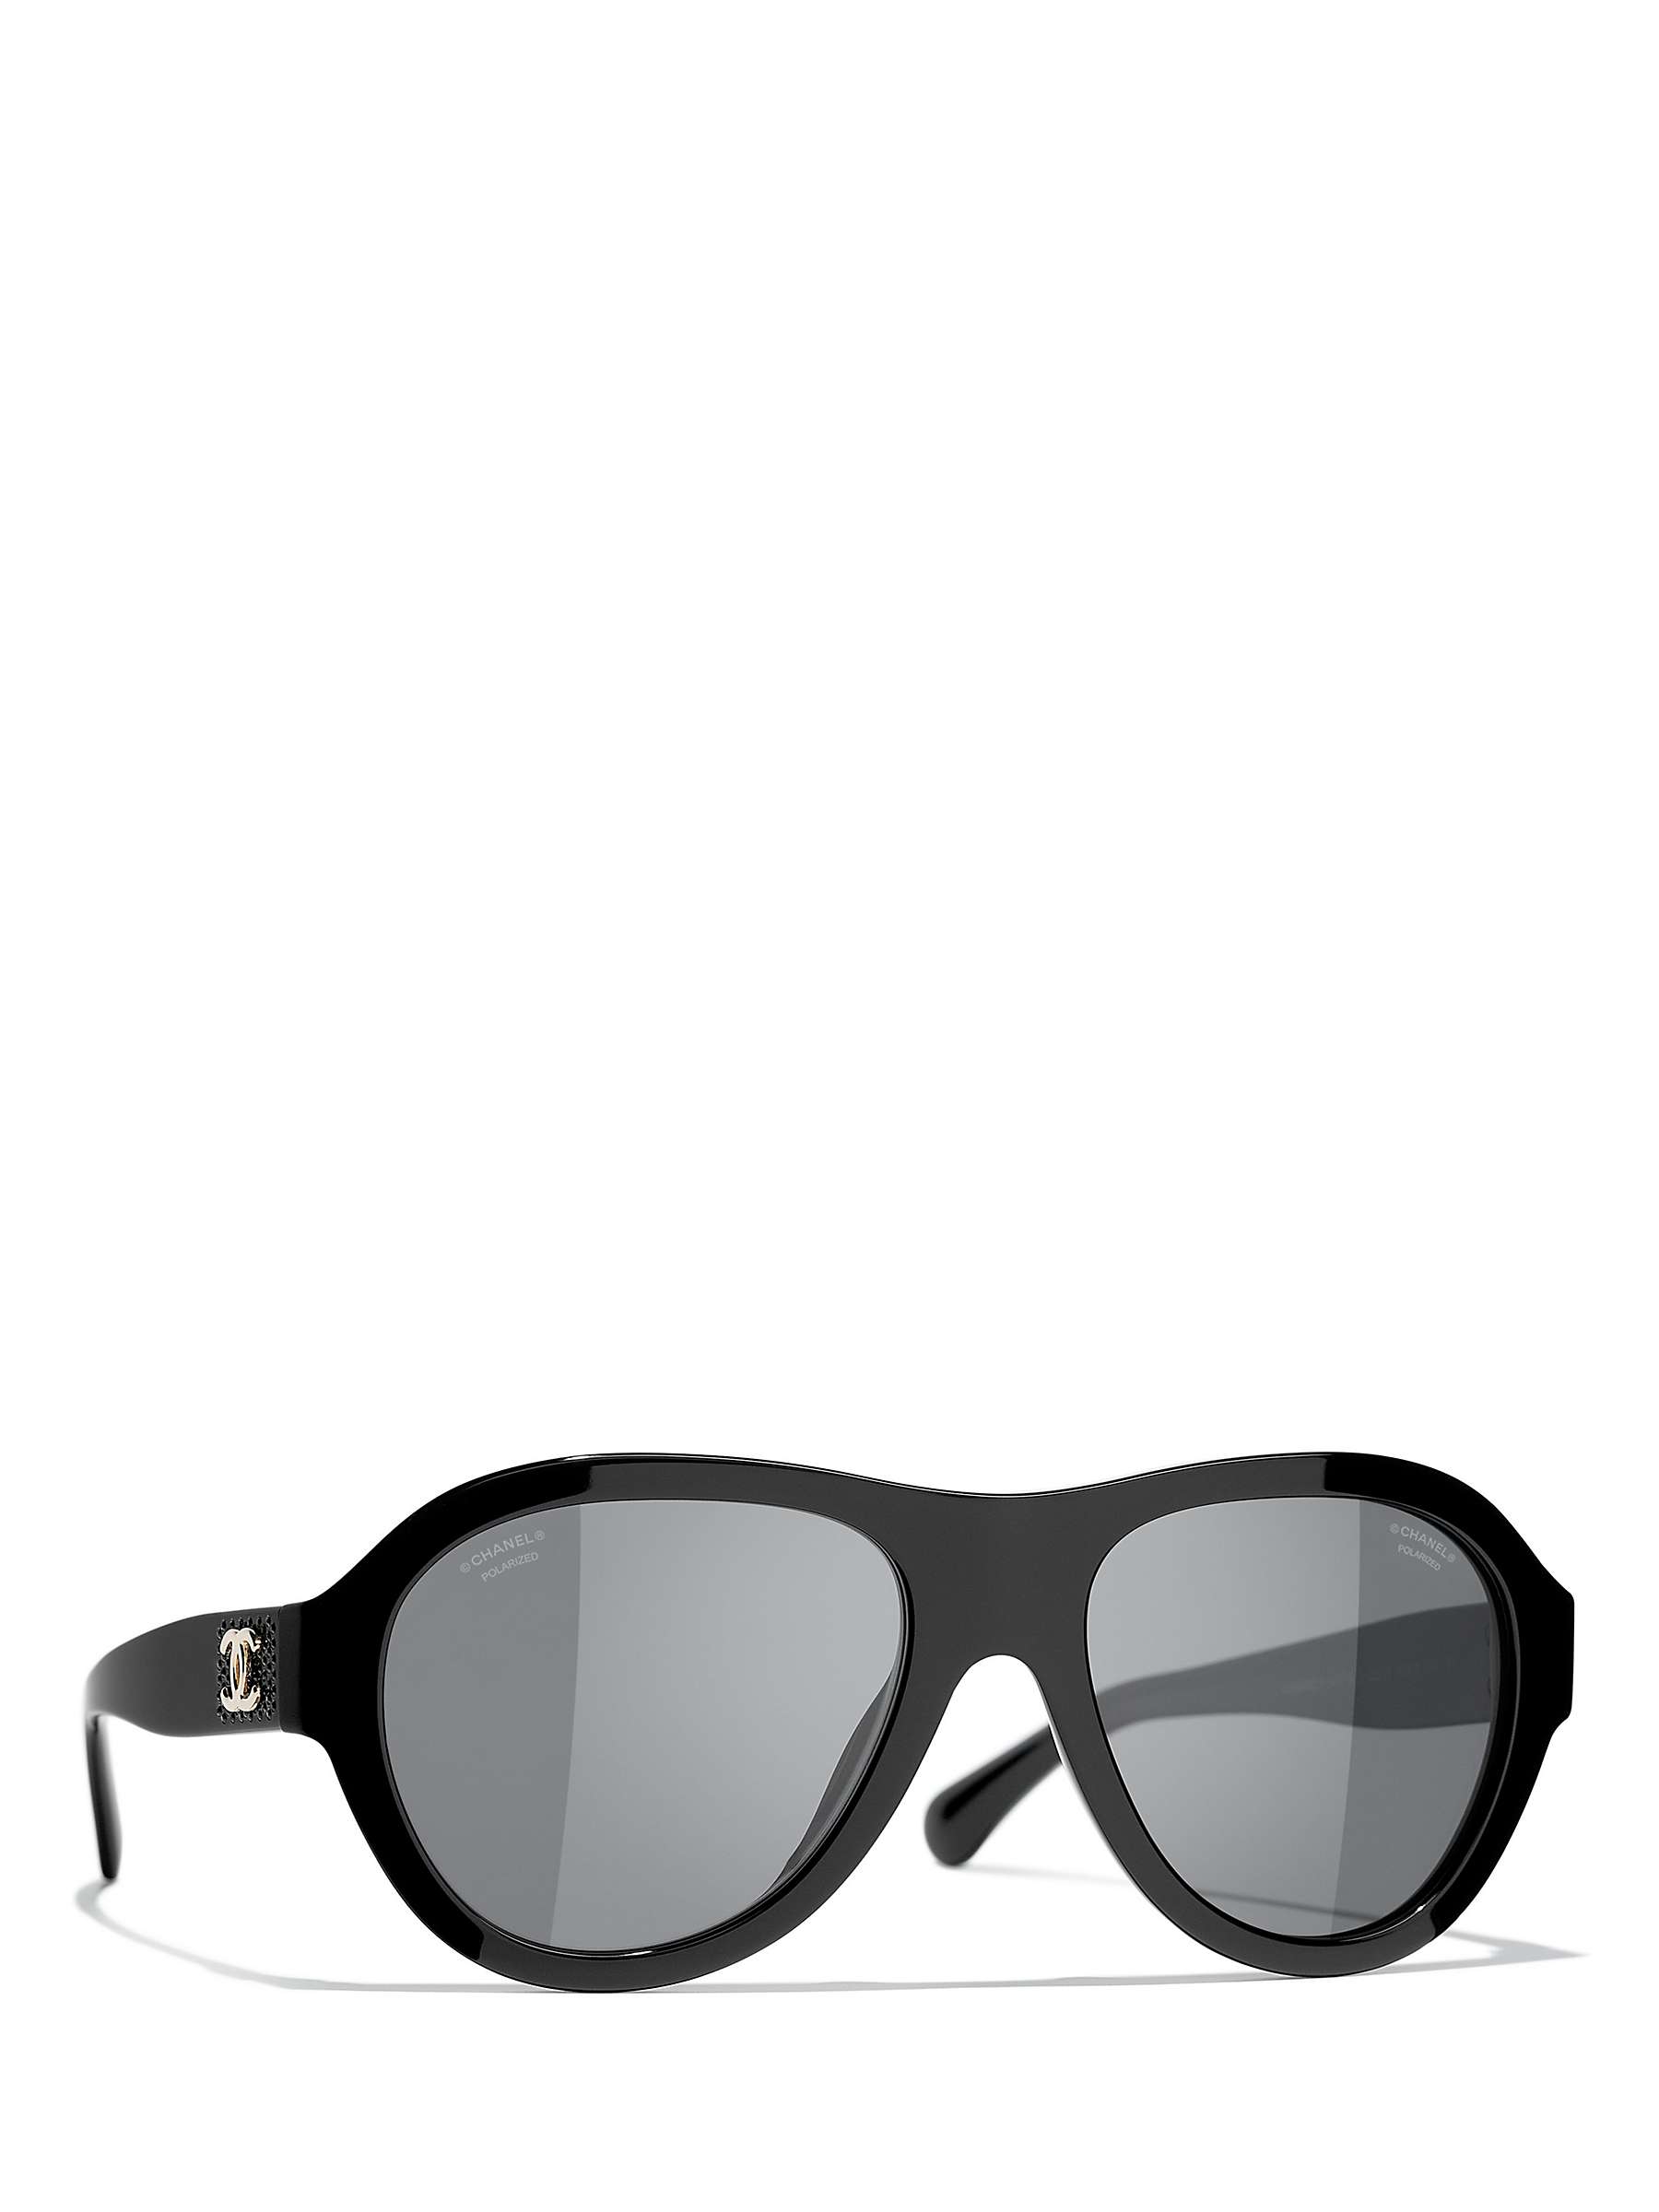 sunglasses chanel for mens